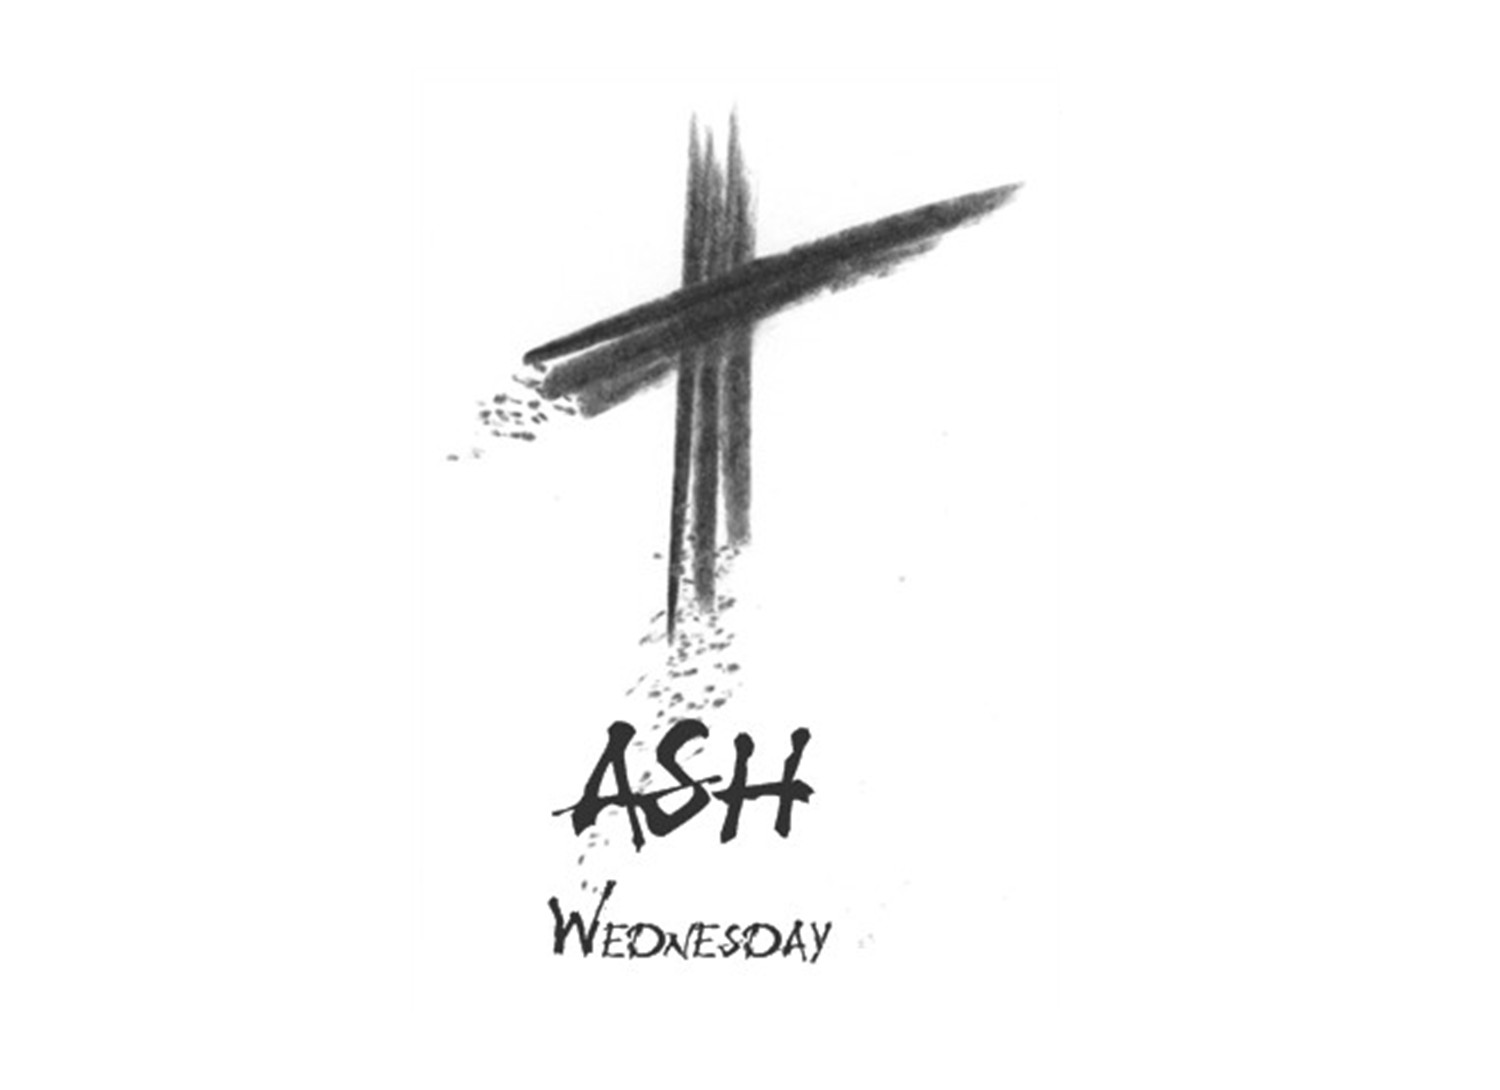 Ash wednesday